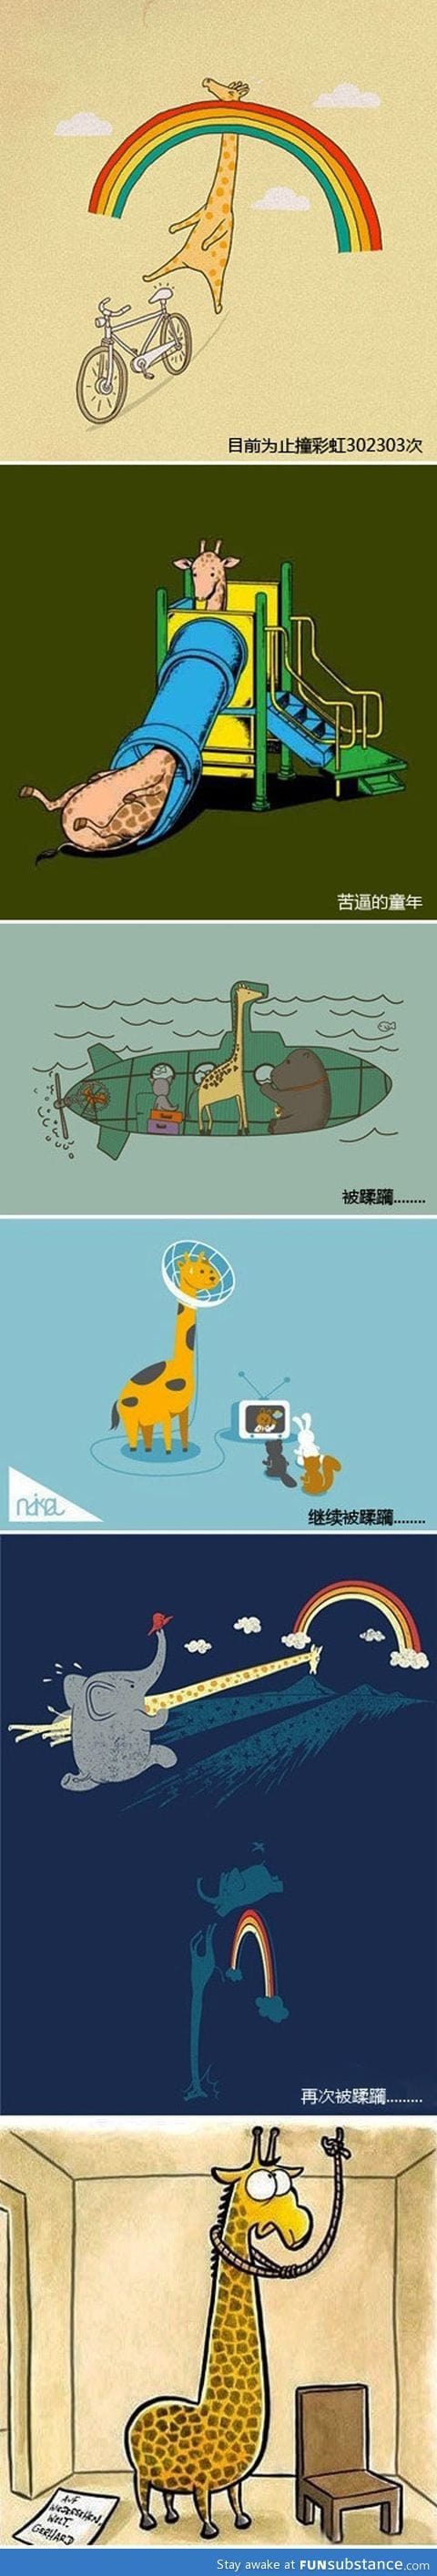 Poor giraffe